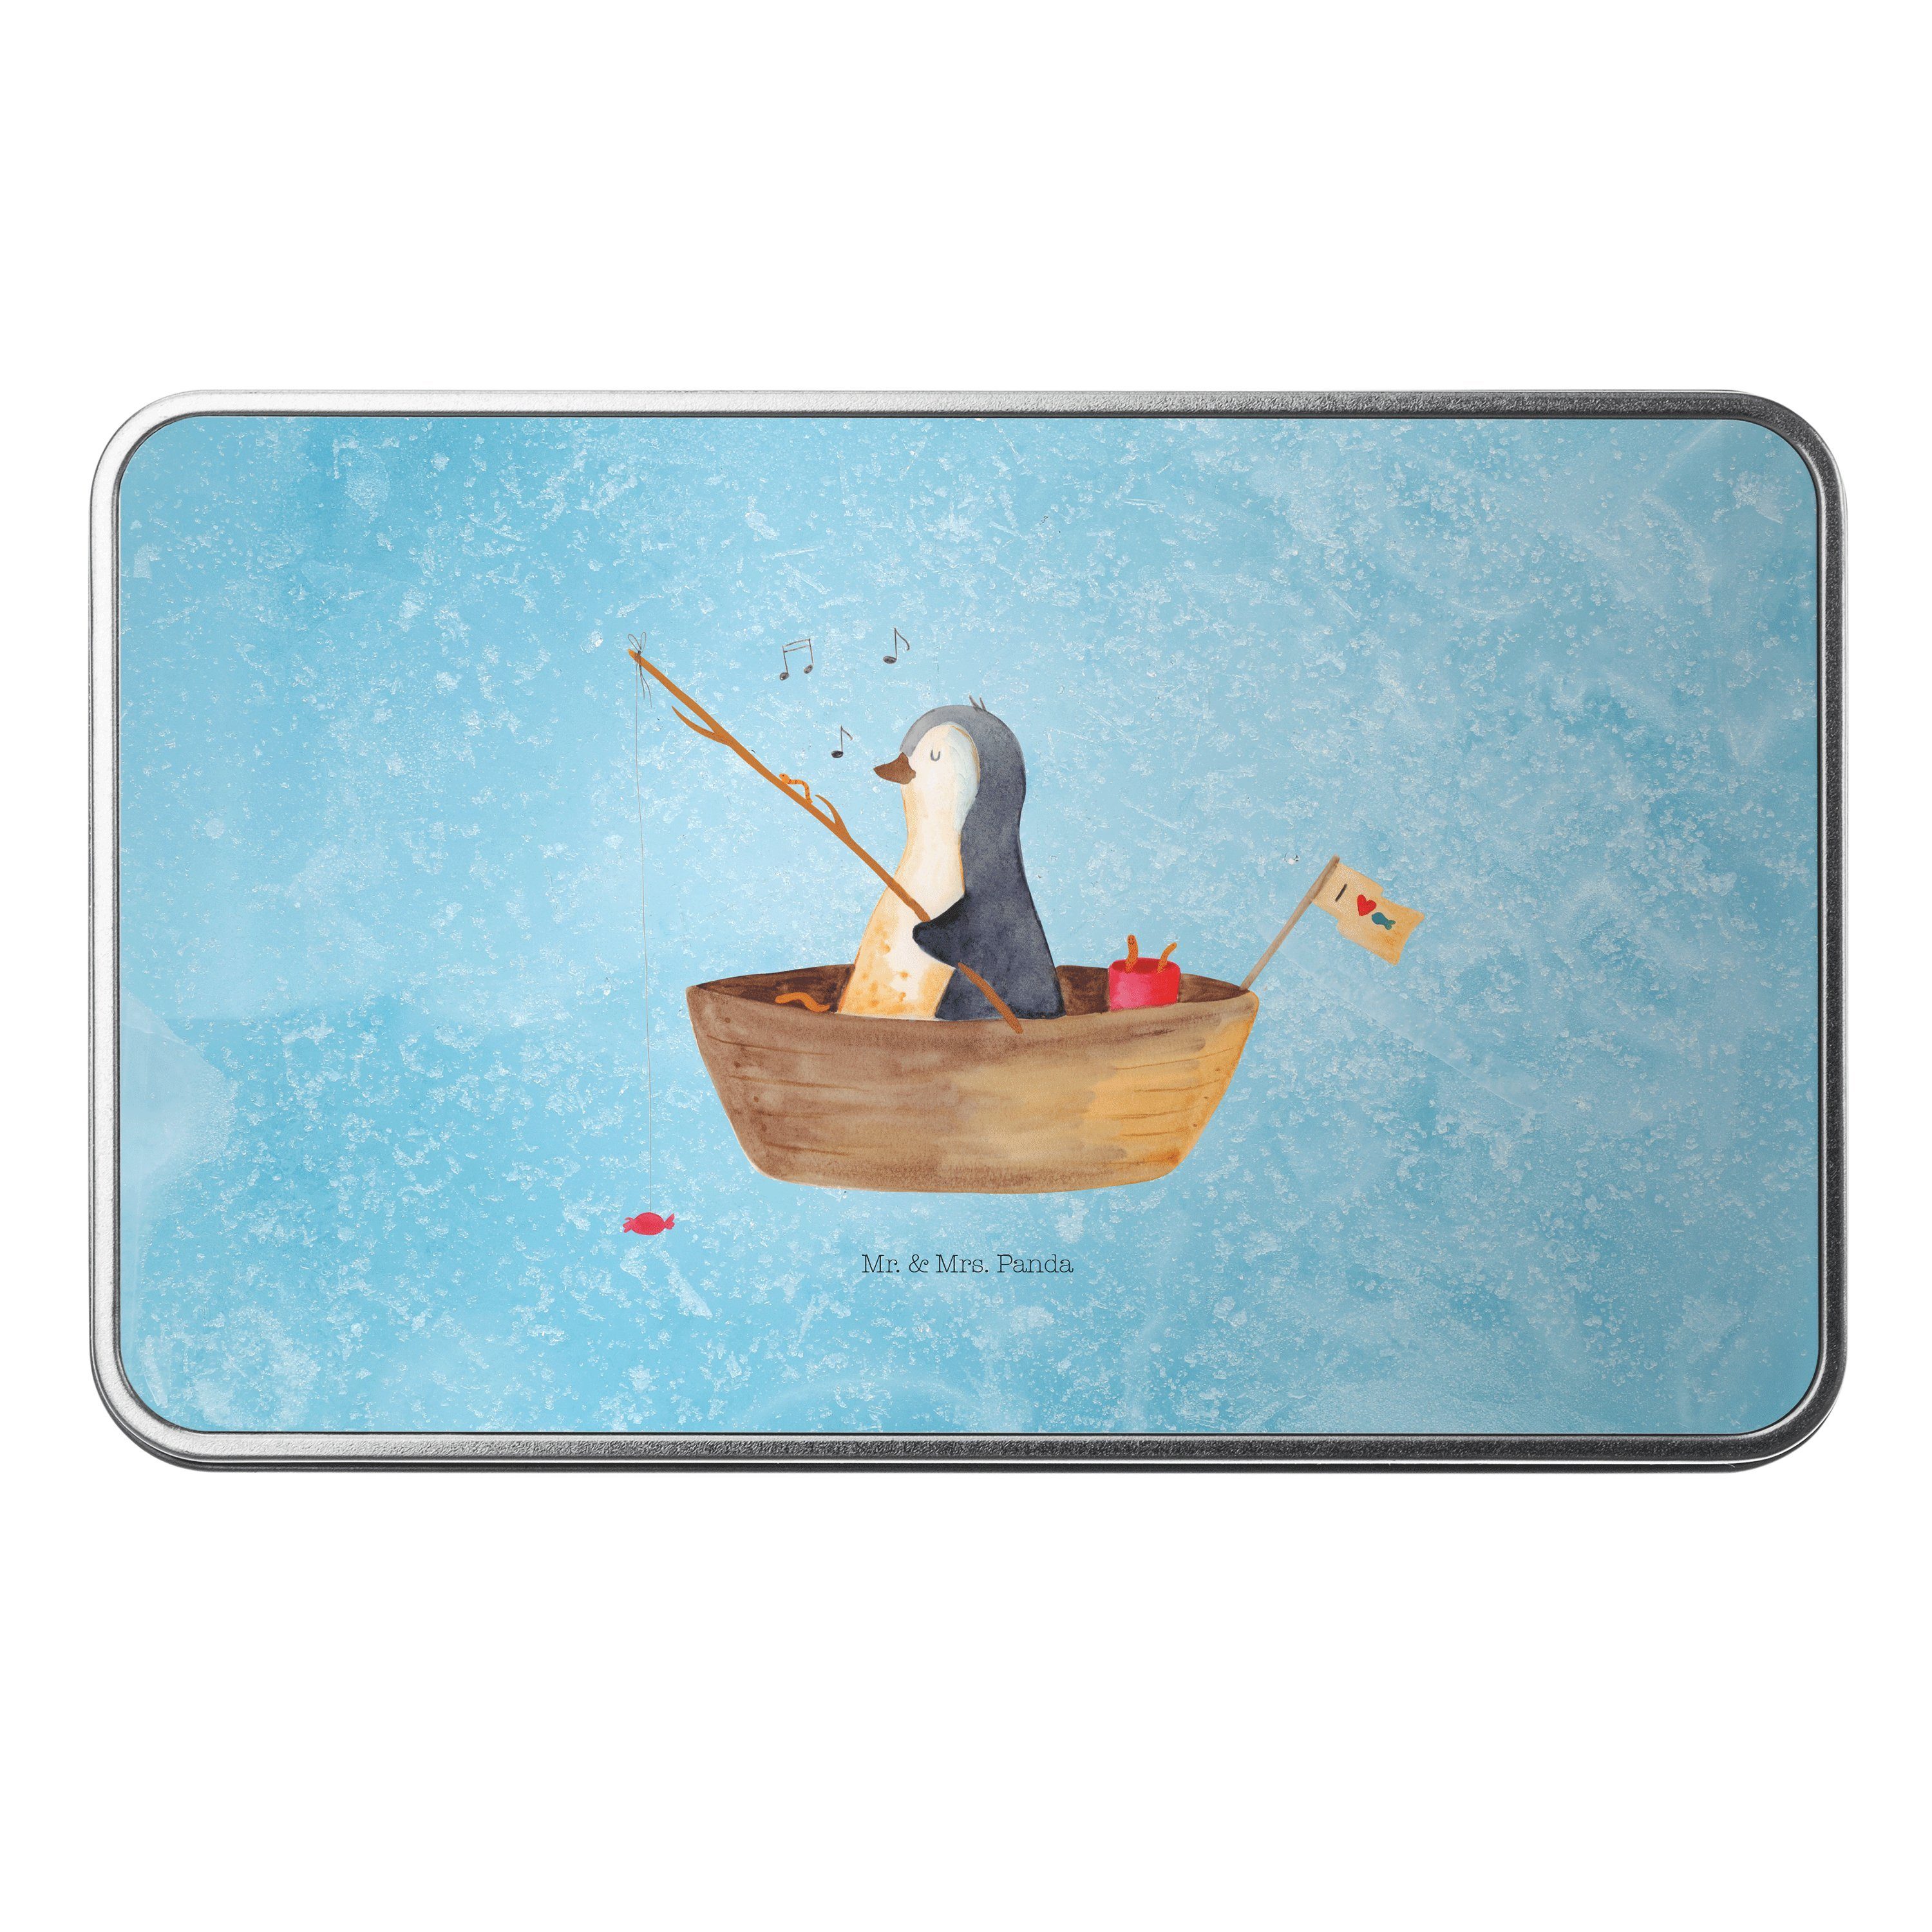 Mr. & Mrs. Panda Dose Pinguin Angelboot - Eisblau - Geschenk, Leben, Container, Dose, Blech (1 St)